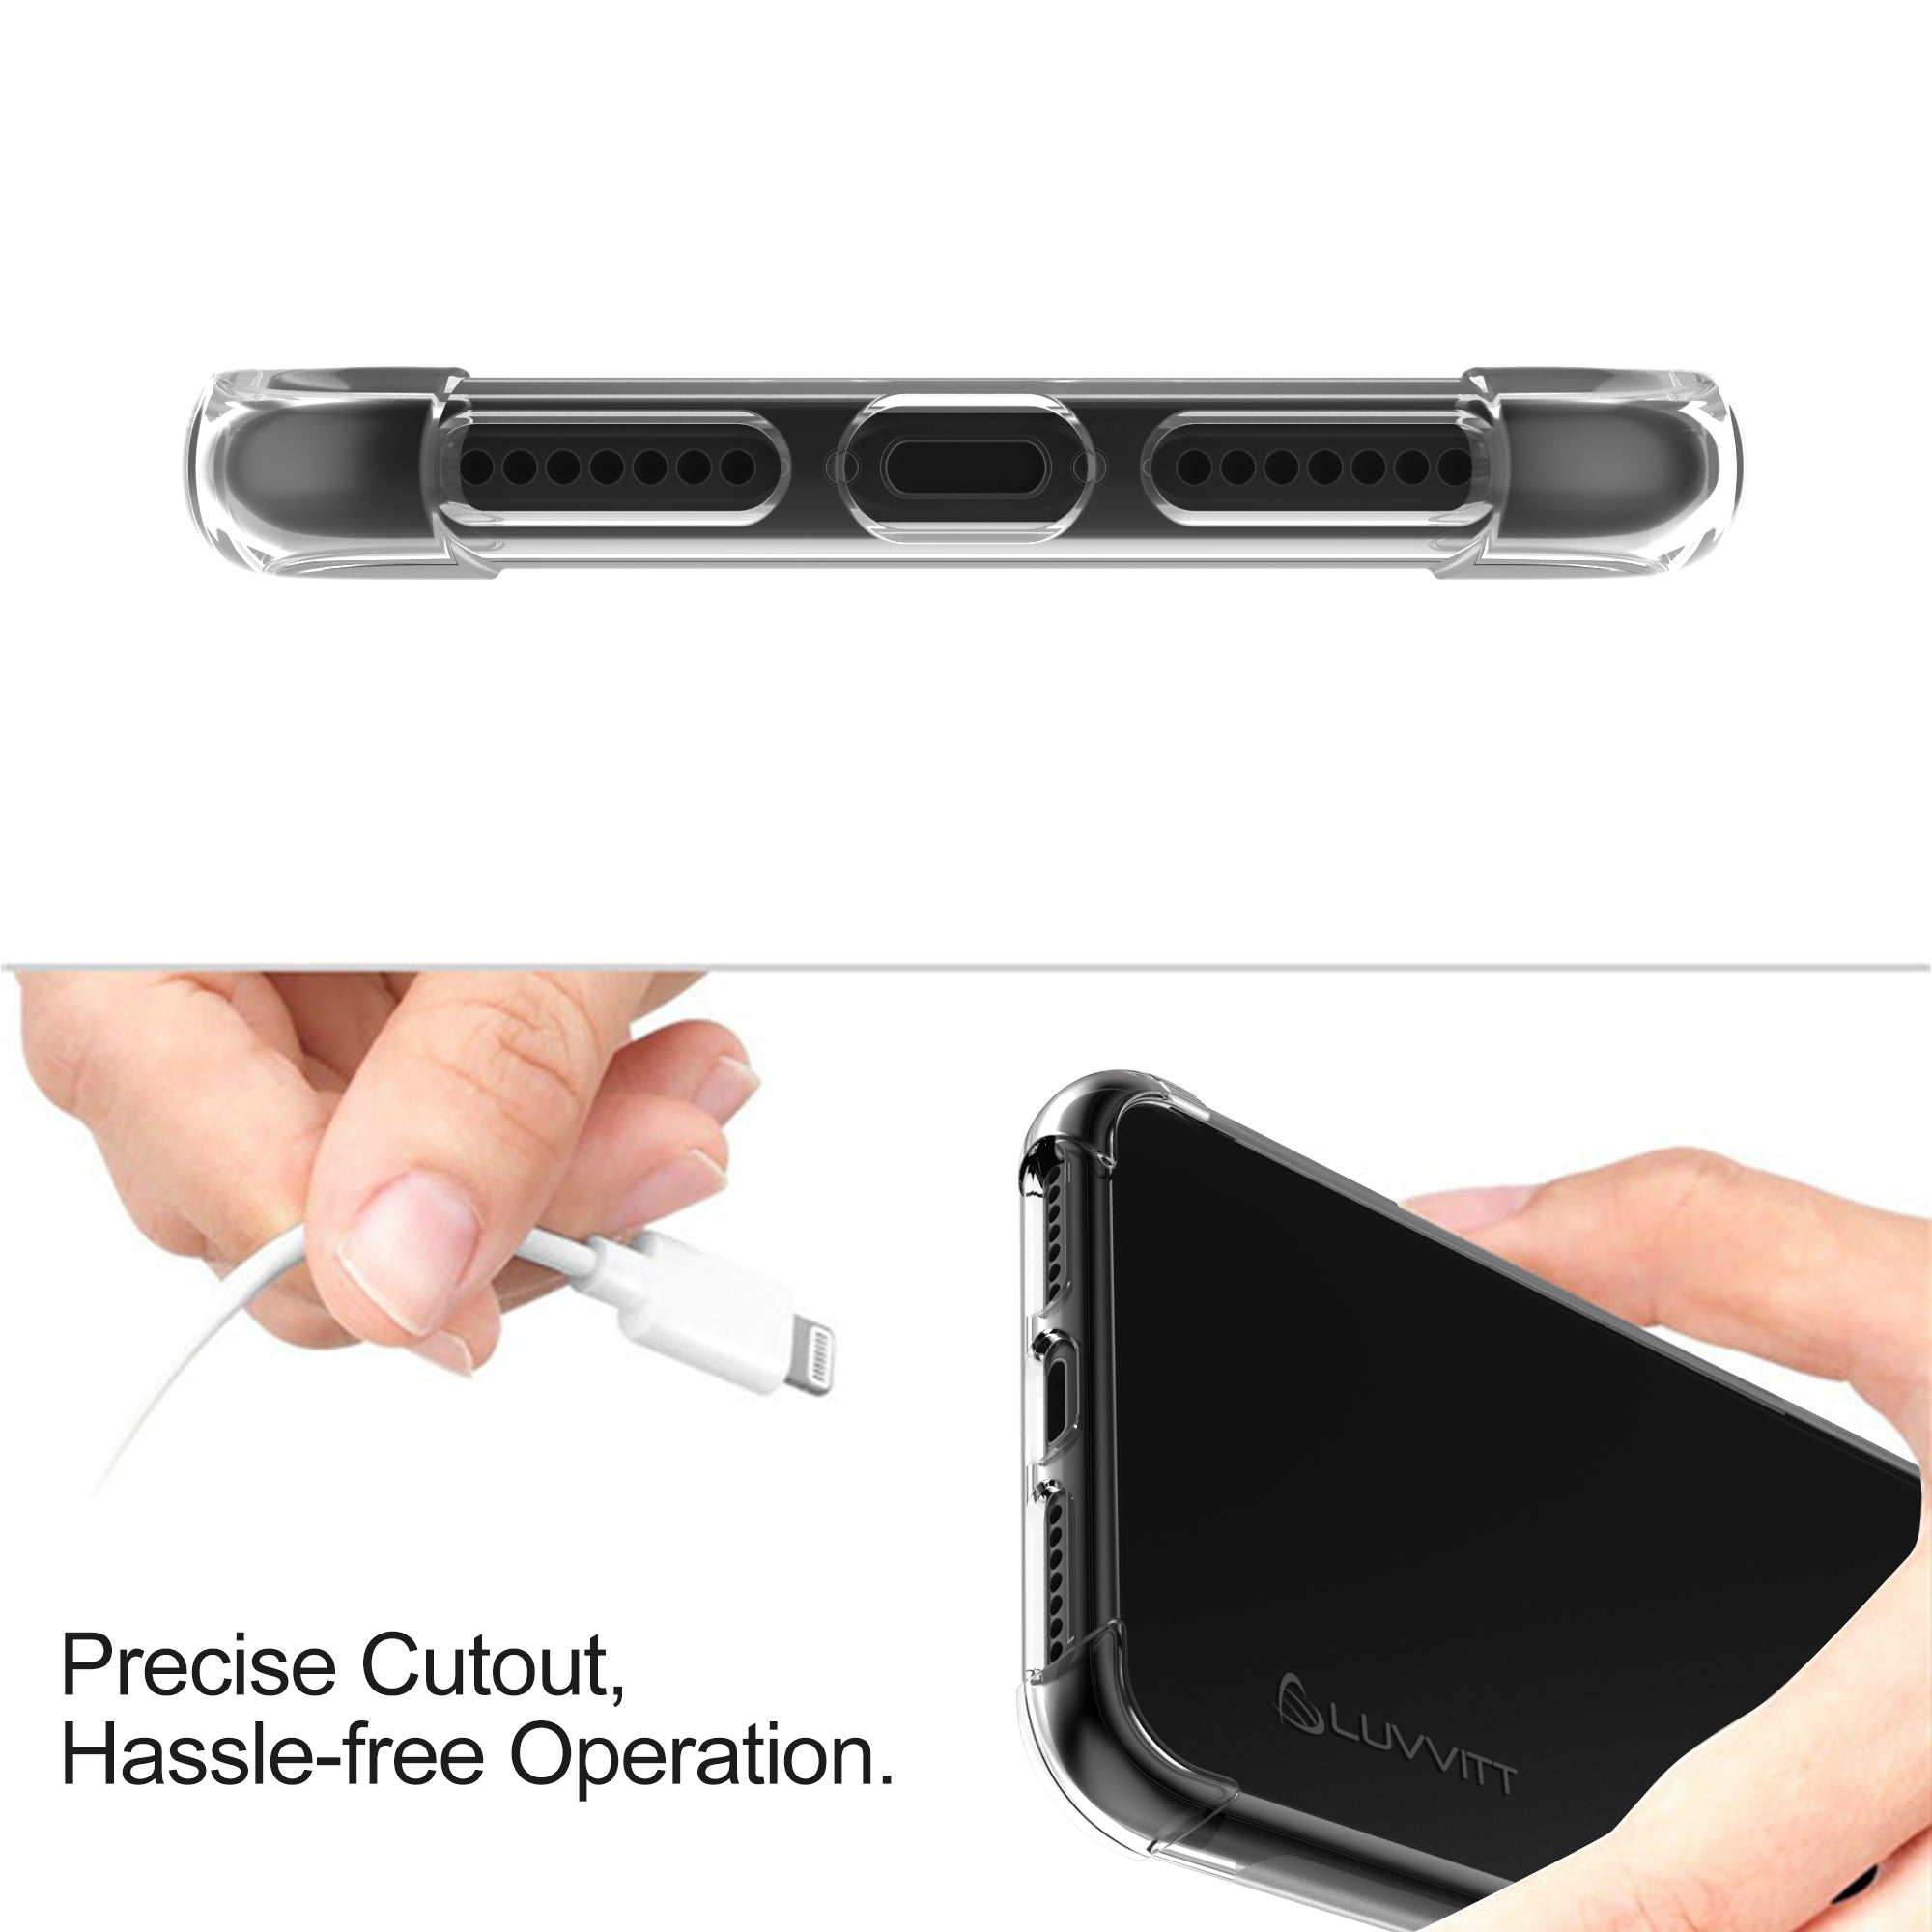 Luvvitt iPhone XS Max Case Clear Grip Flexible TPU for 6.5 inch Screen 2018